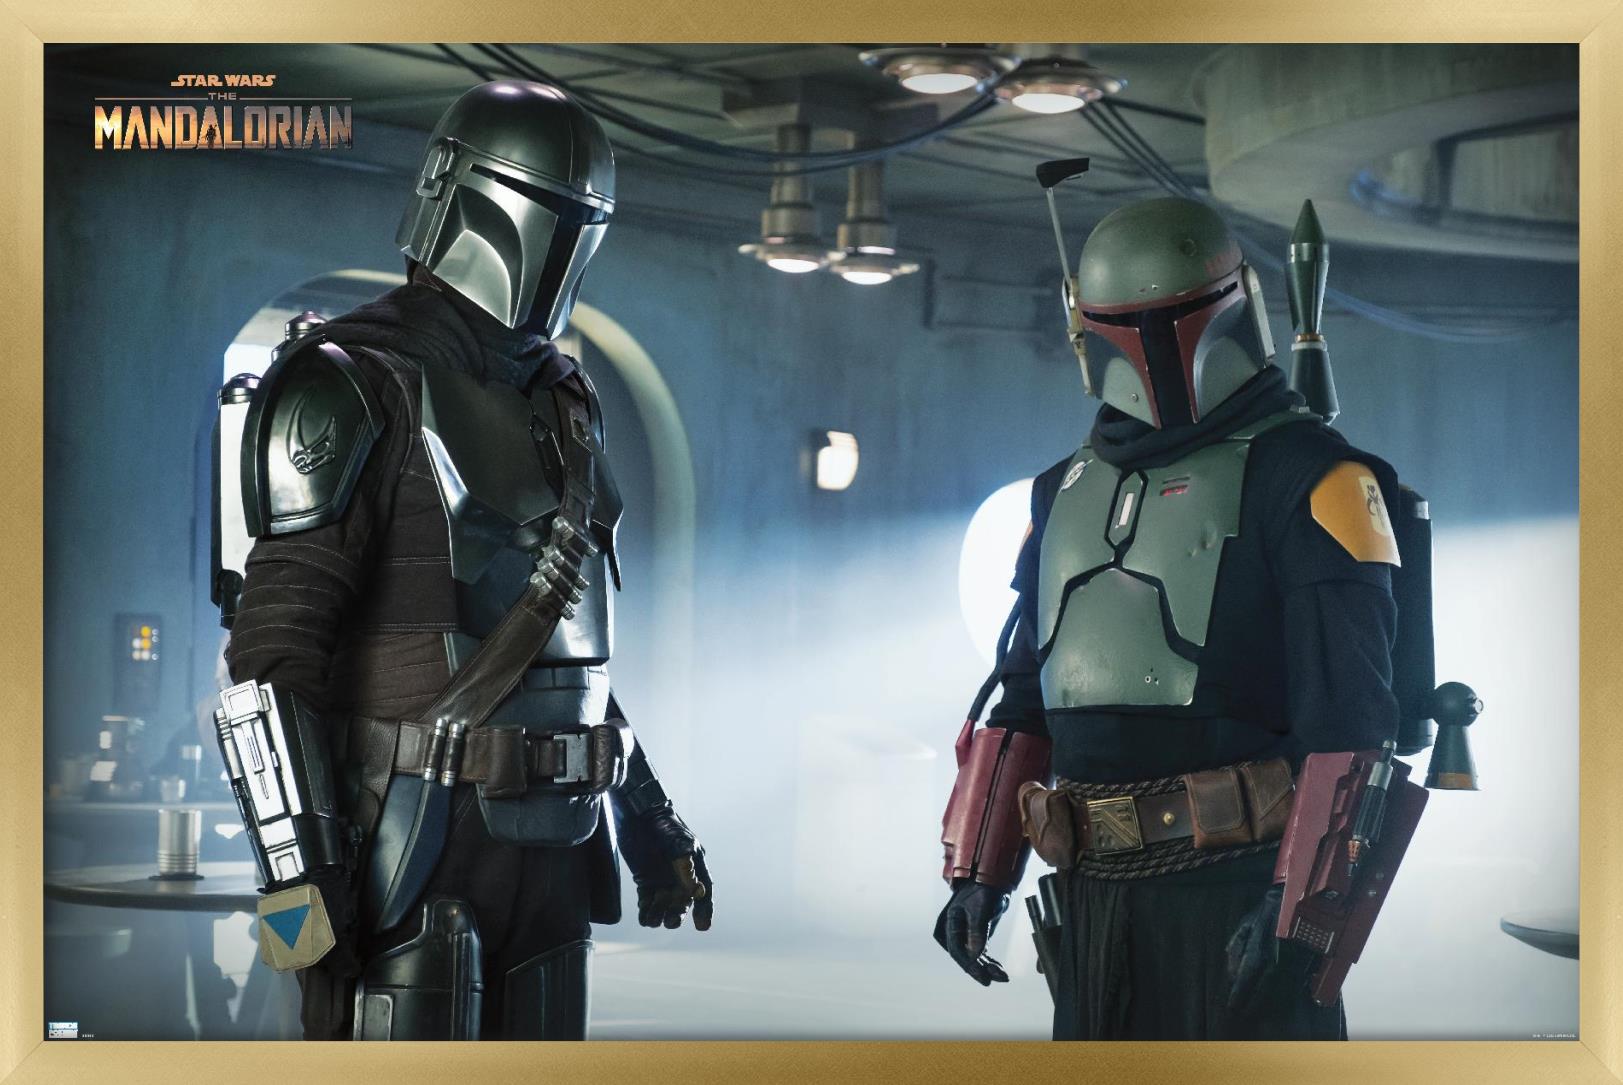 Star Wars: The Mandalorian Season 2 - Duo Wall Poster, 14.725" x 22.375", Framed - image 1 of 5